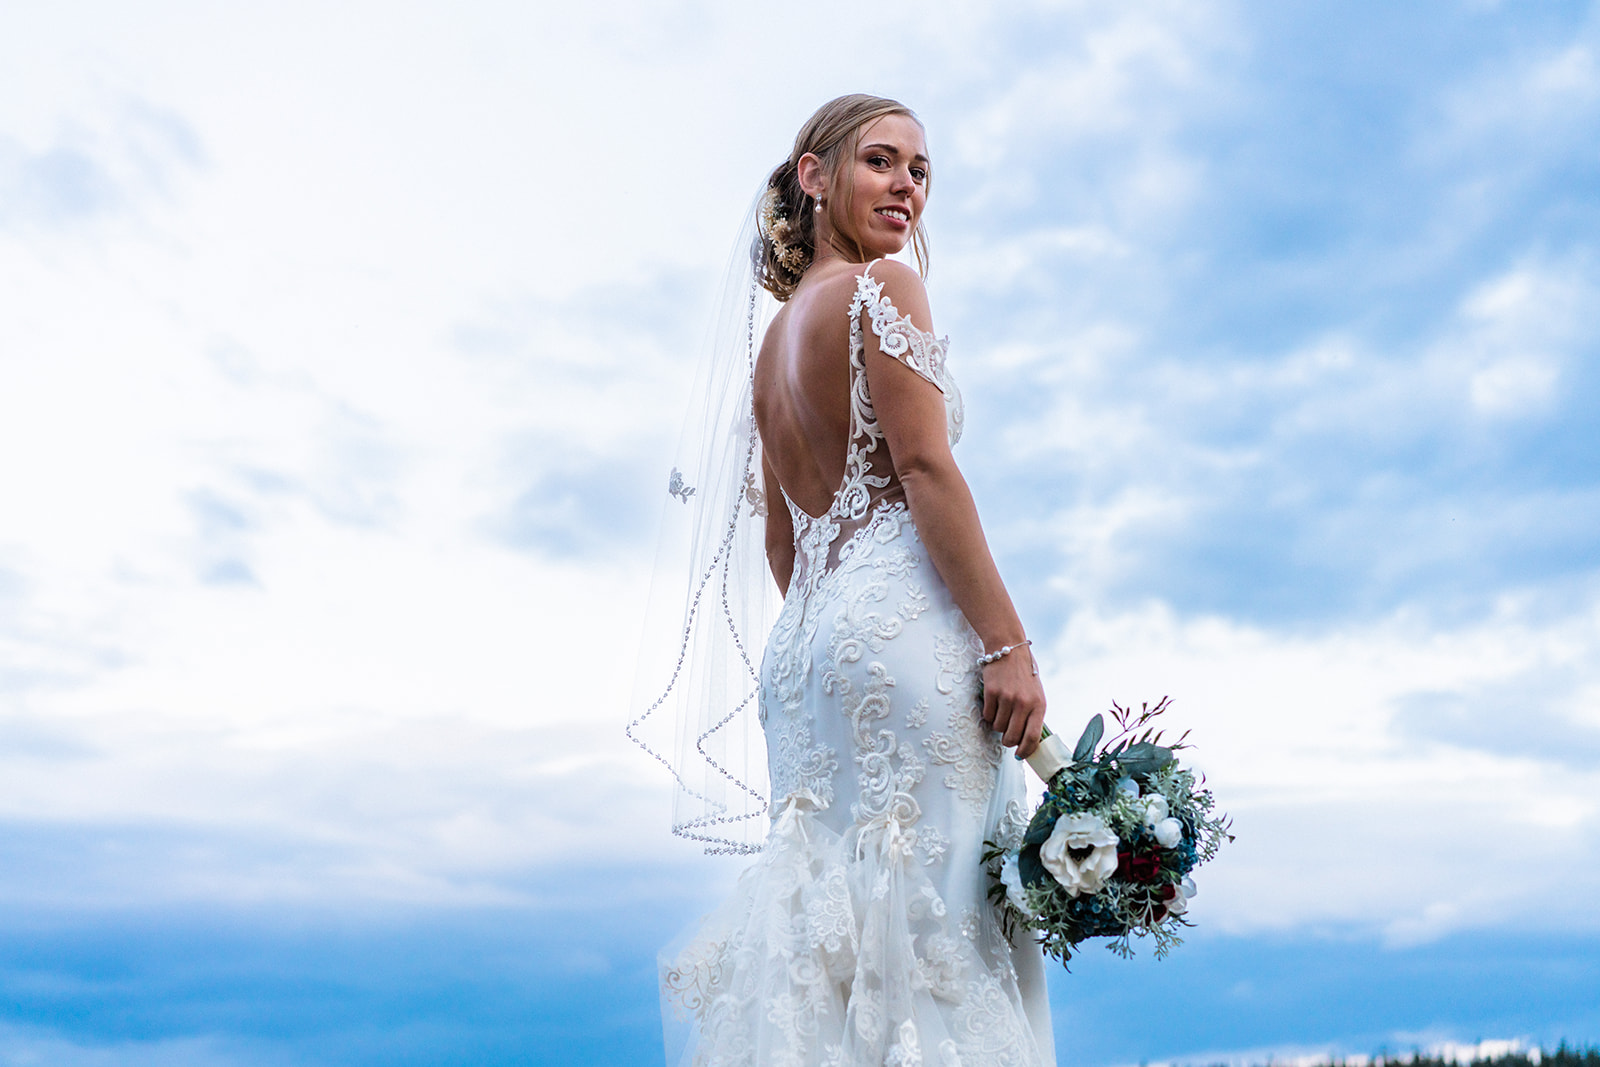 Bride posing in a white wedding dress